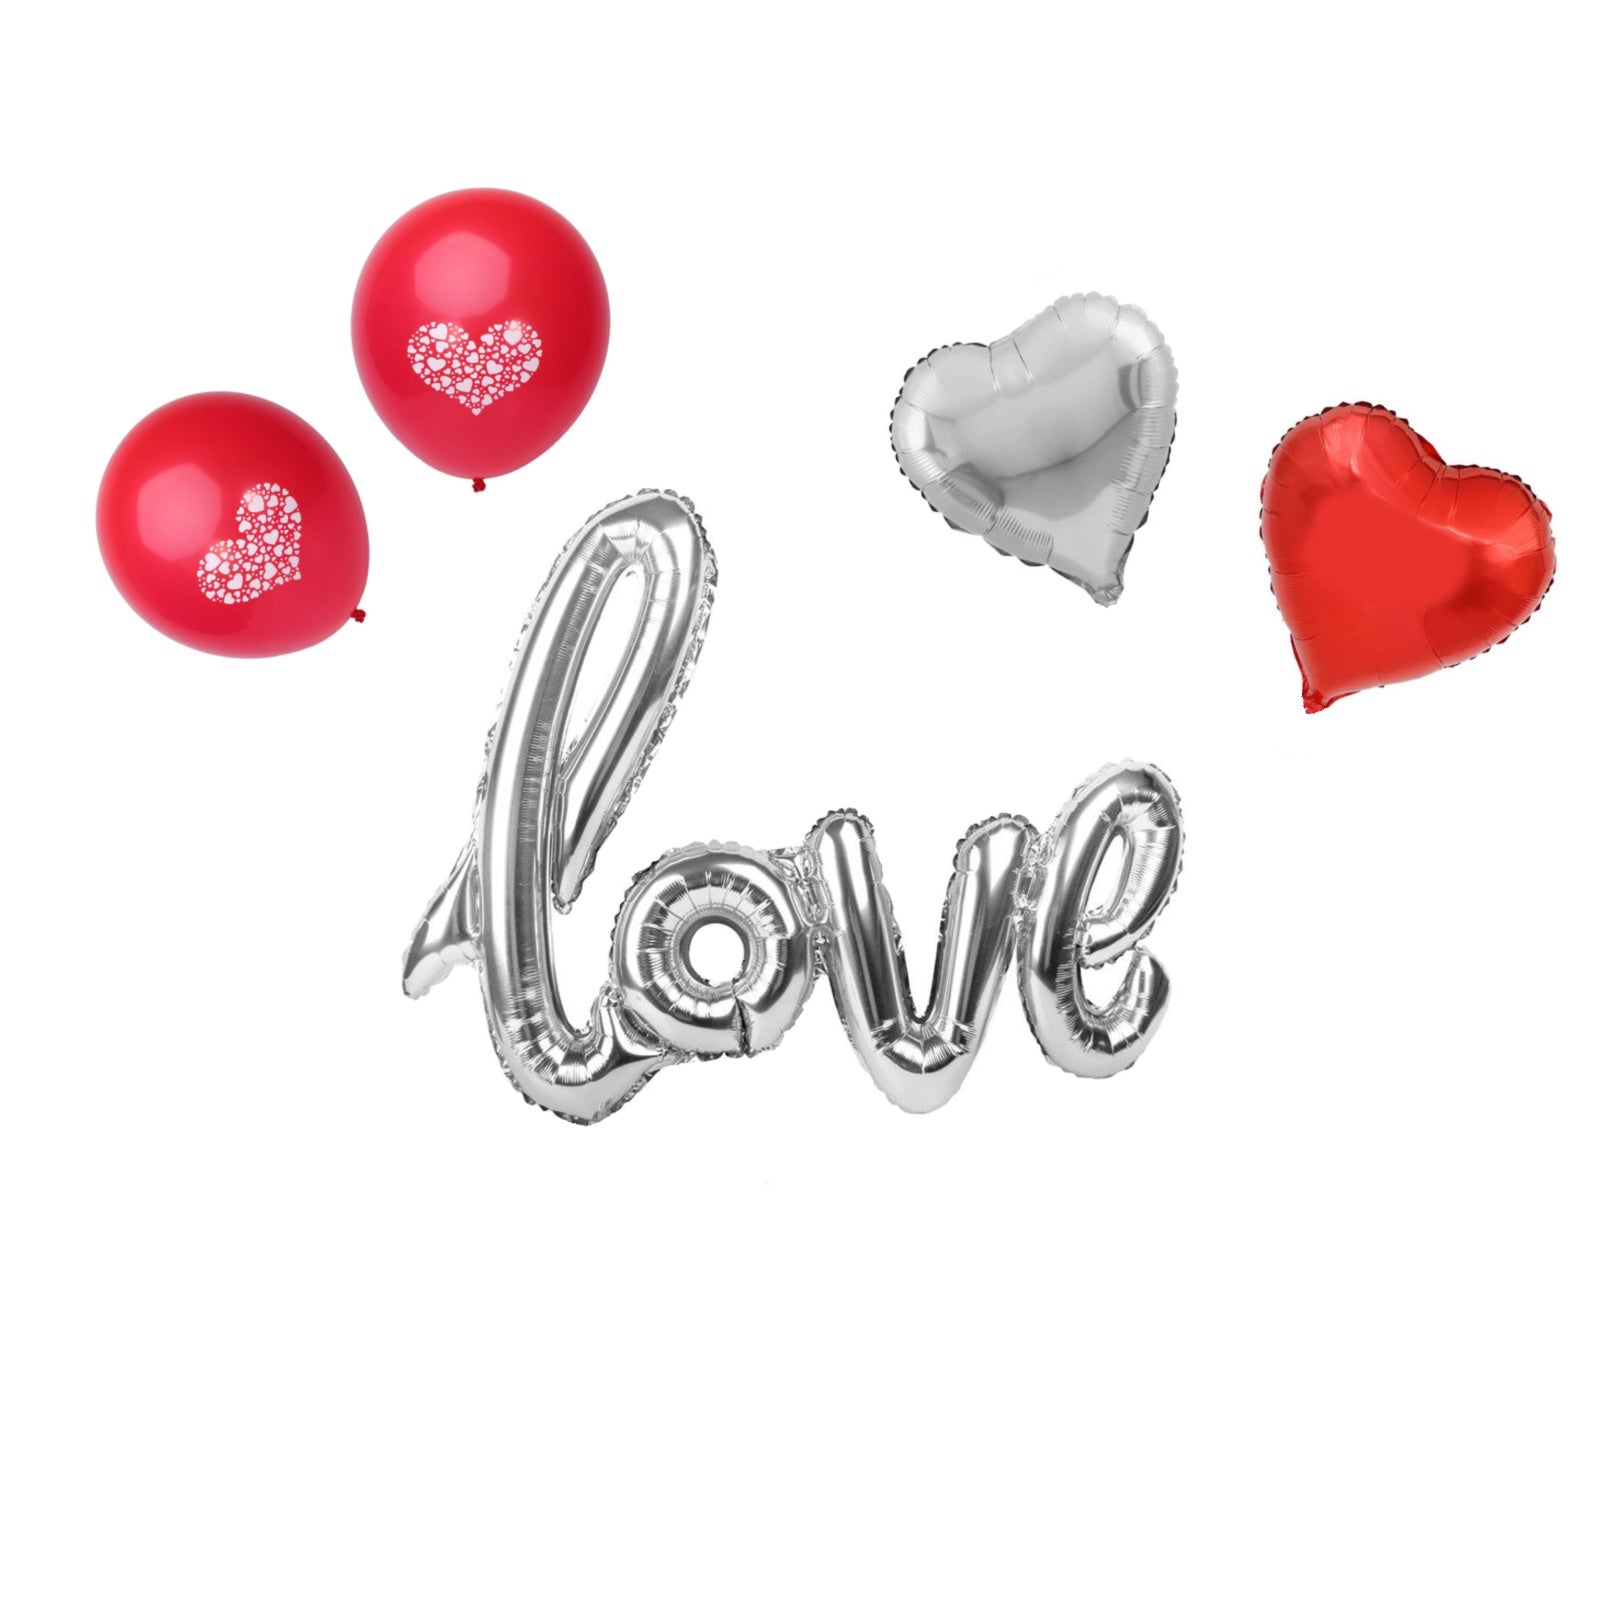 Silver Love Balloons Set, Silver & Red Heart Balloons